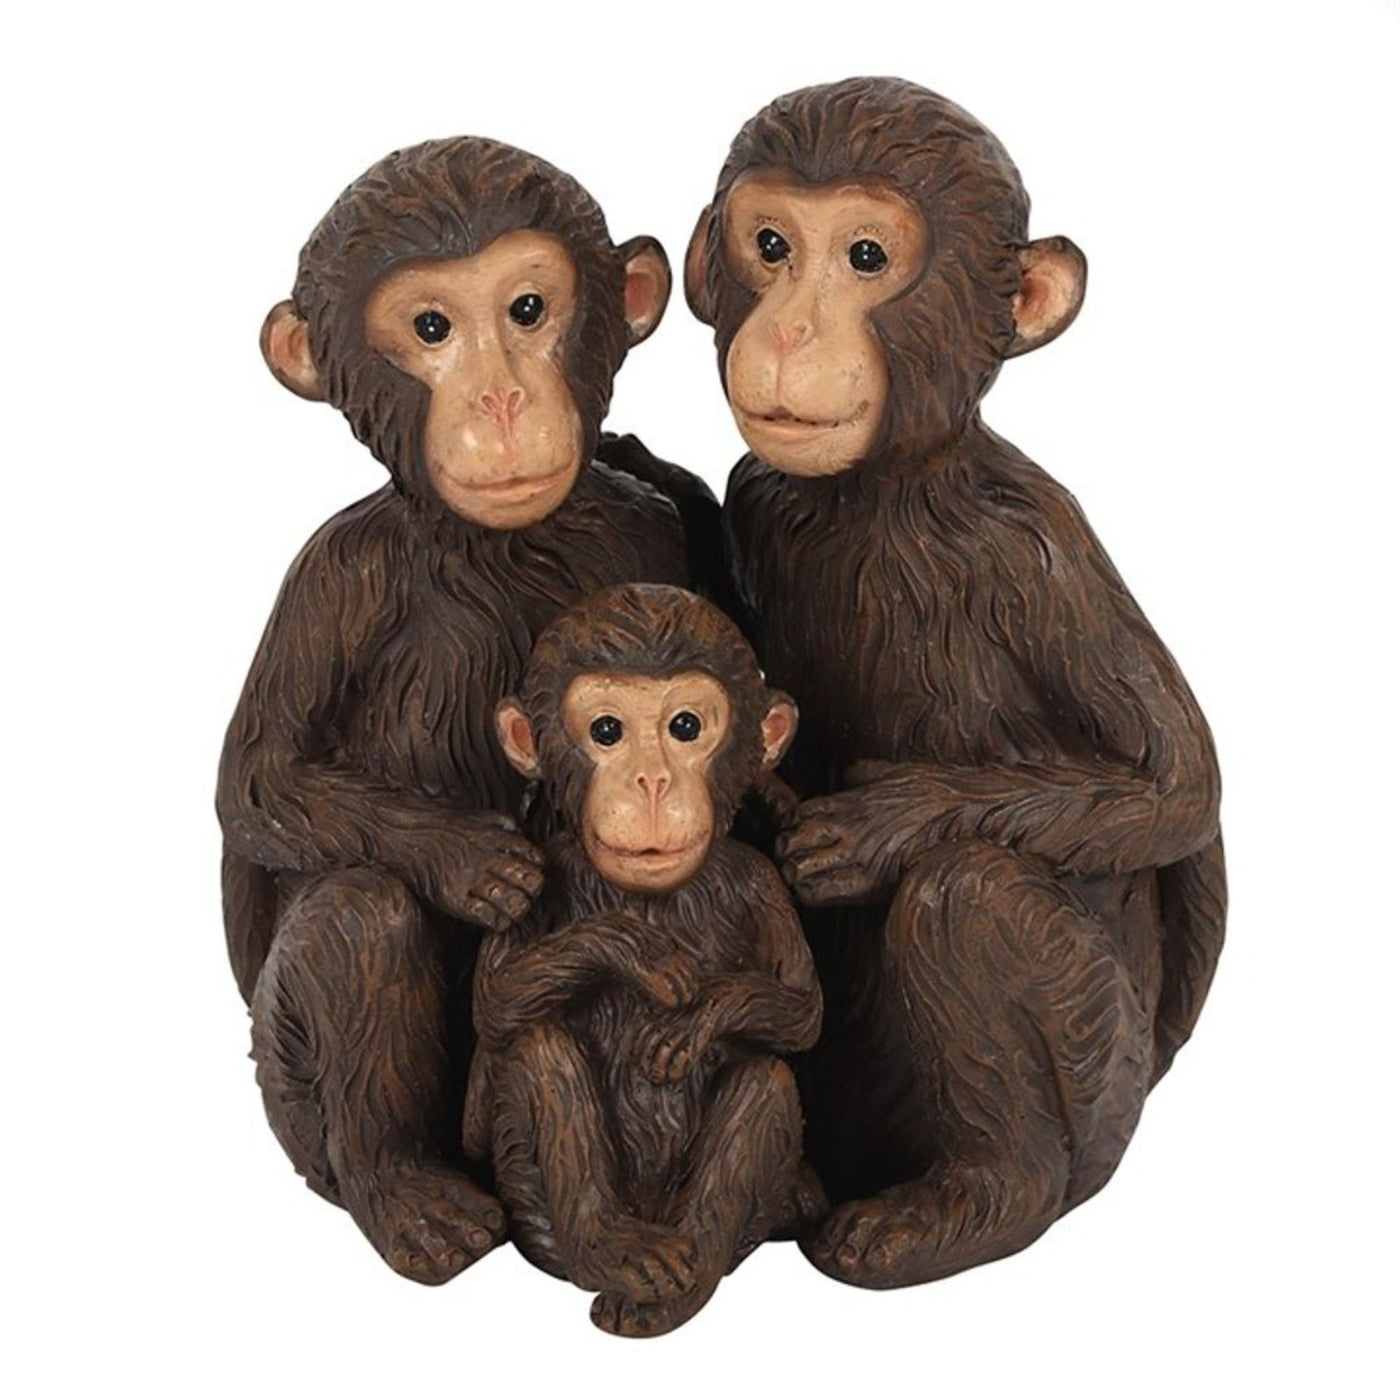 Monkey Family Decorative Home Ornament.